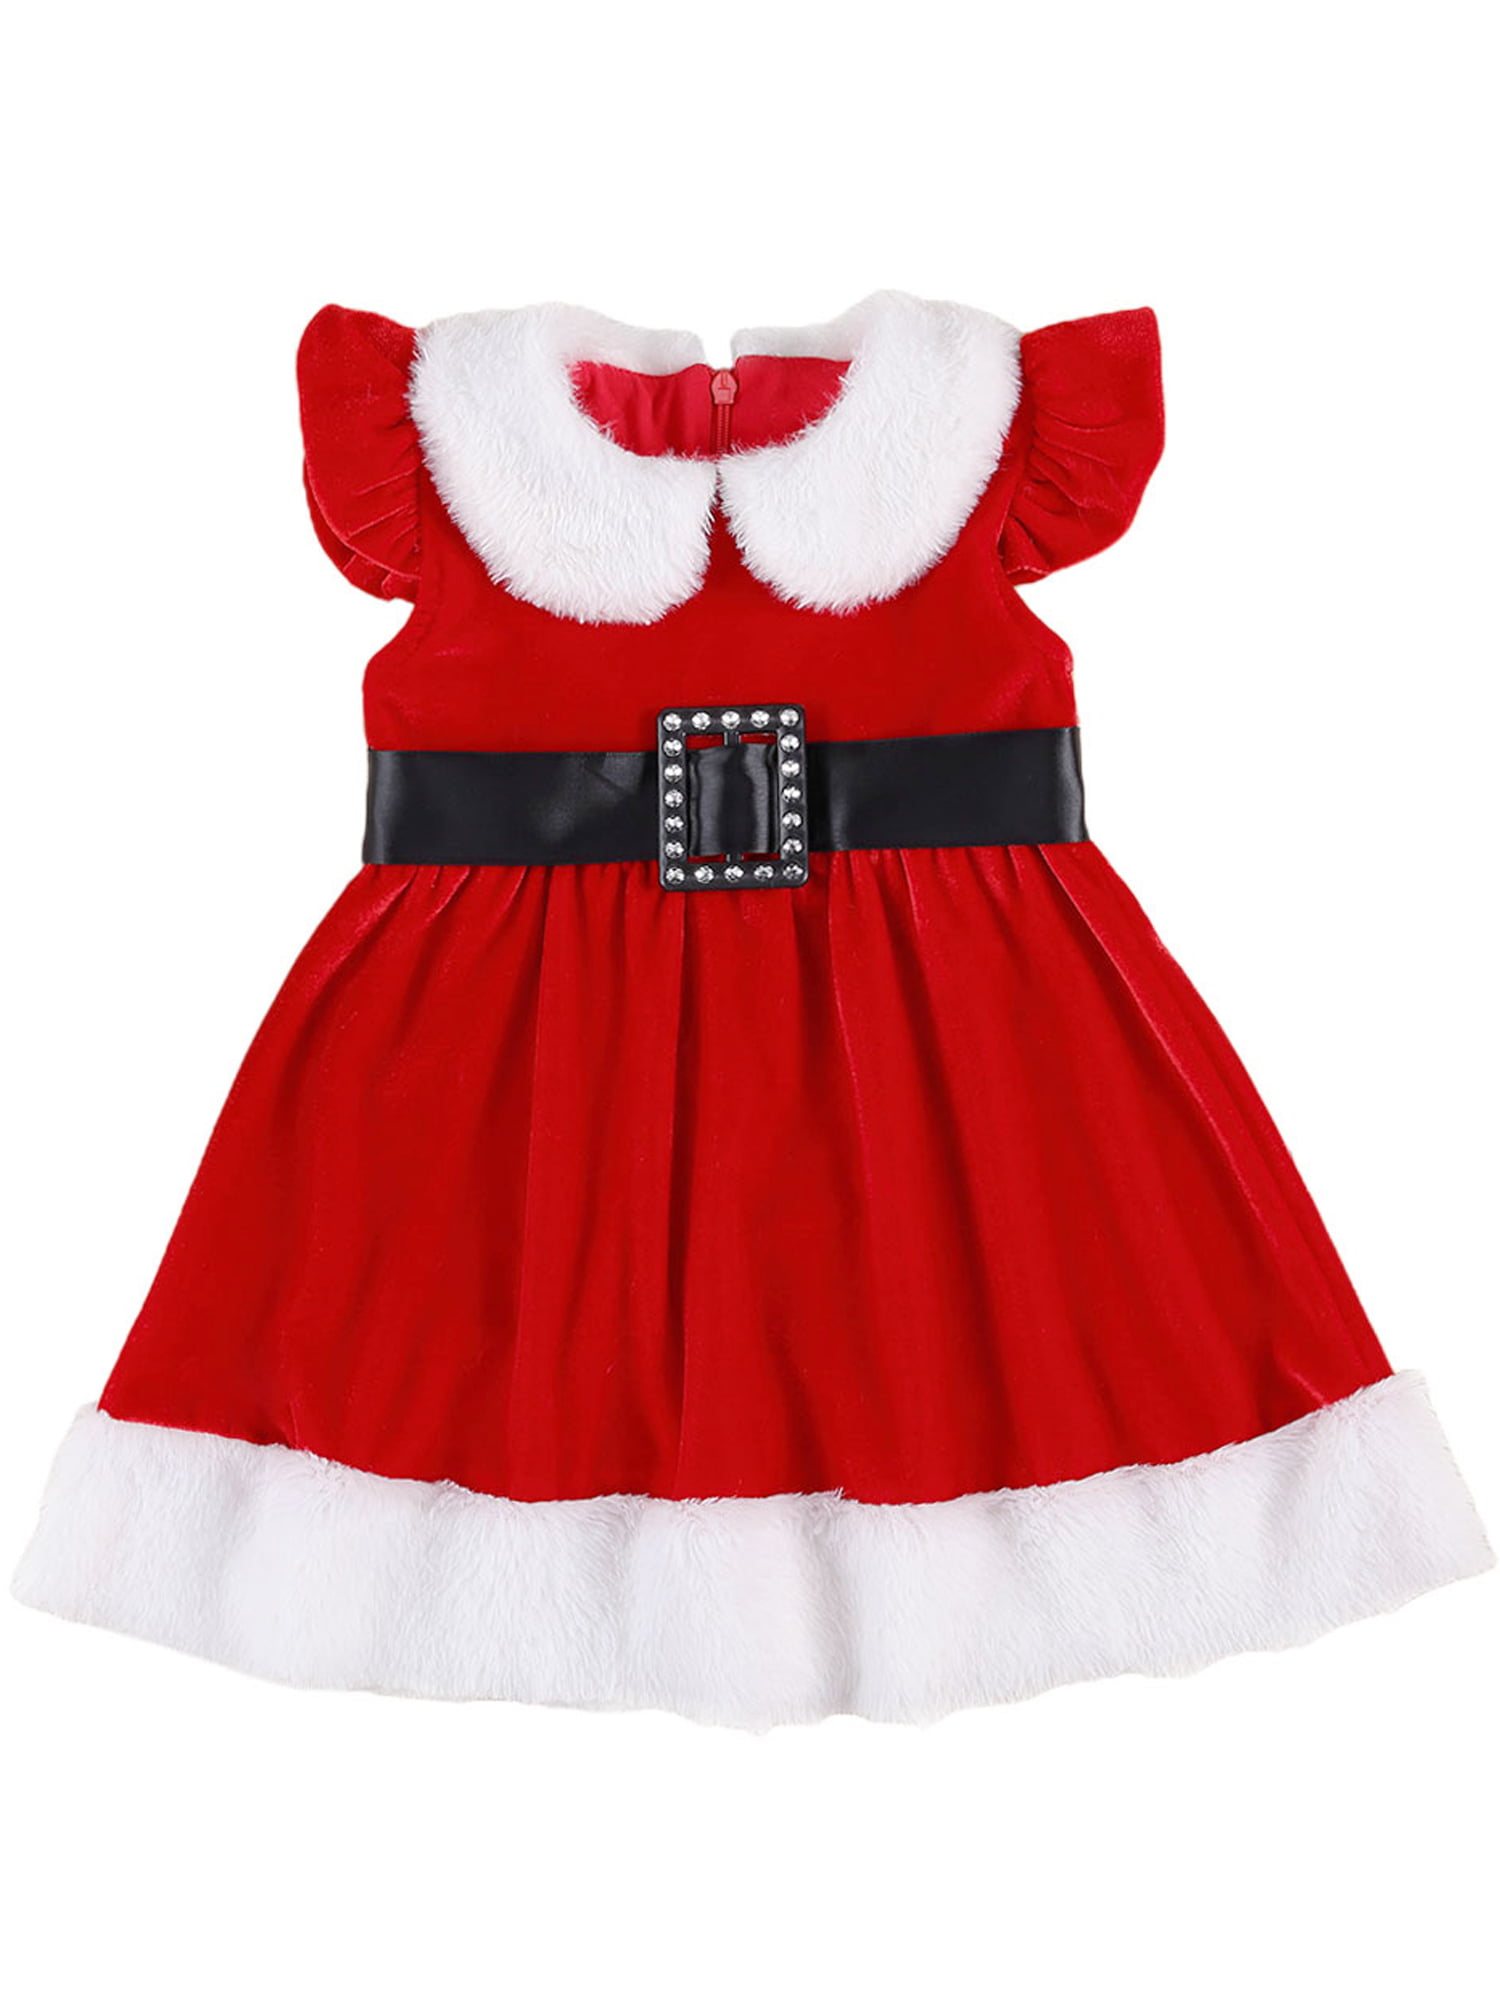 Infant Toddler Baby Kid Girl Chrsitmas Dress Fly Sleeve Santa Claus Xmas Party Princess Dress Tutu Lace Dress 